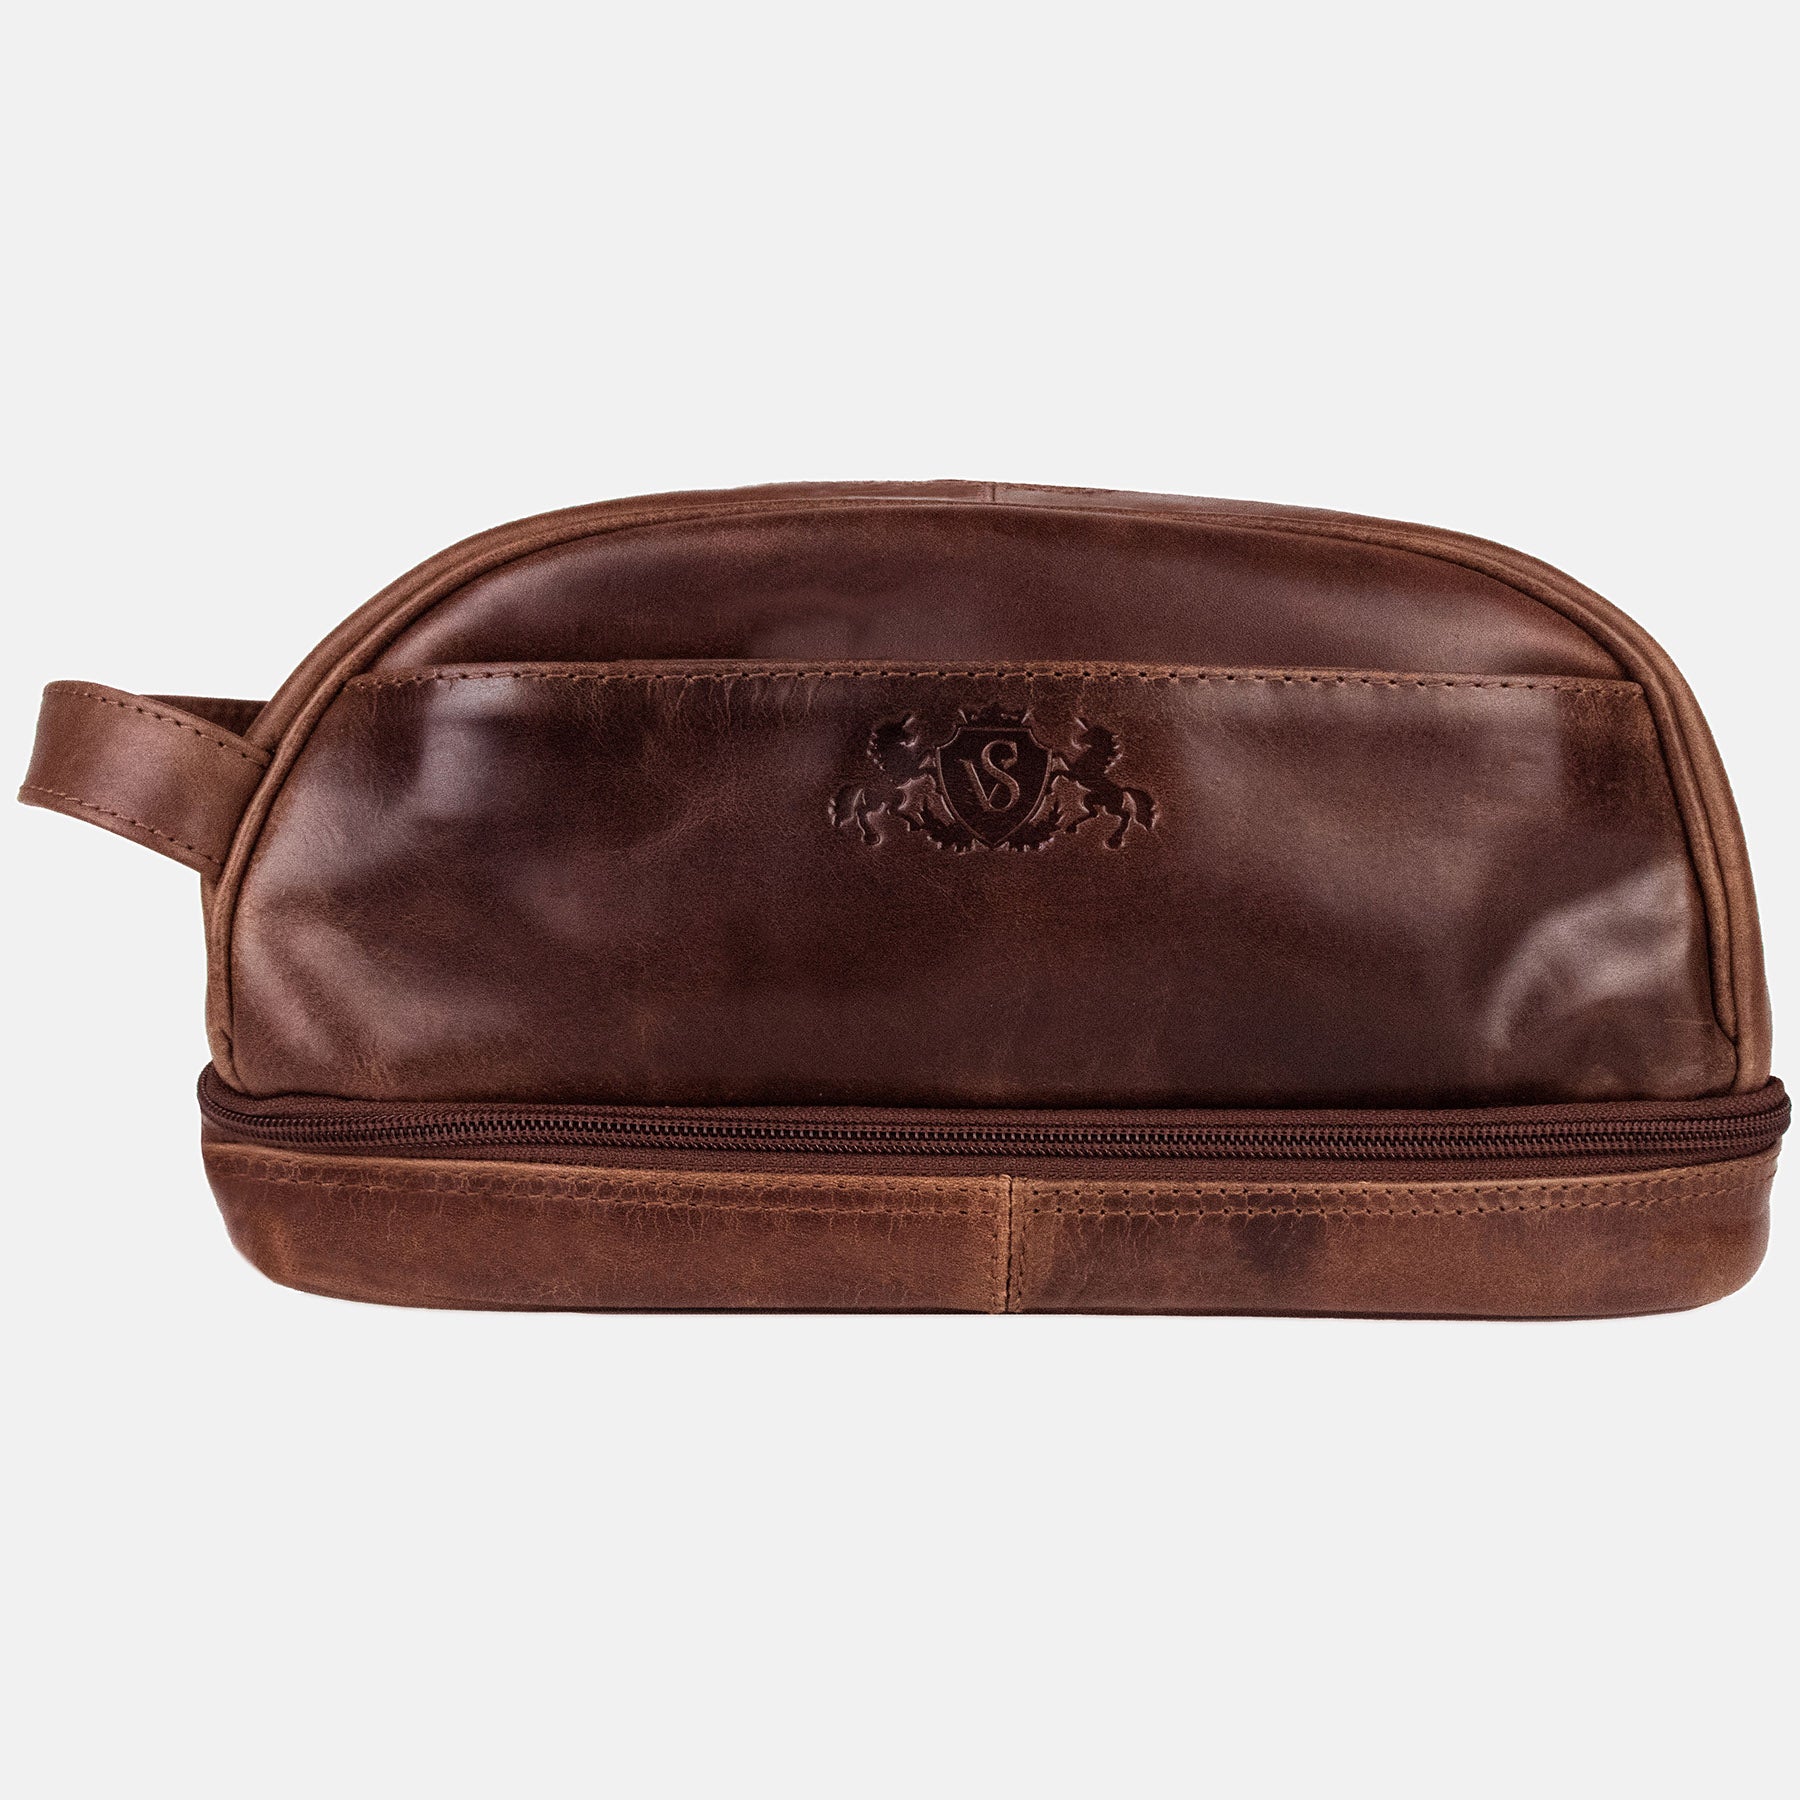 Wash bag ALEX natural leather brown-cognac